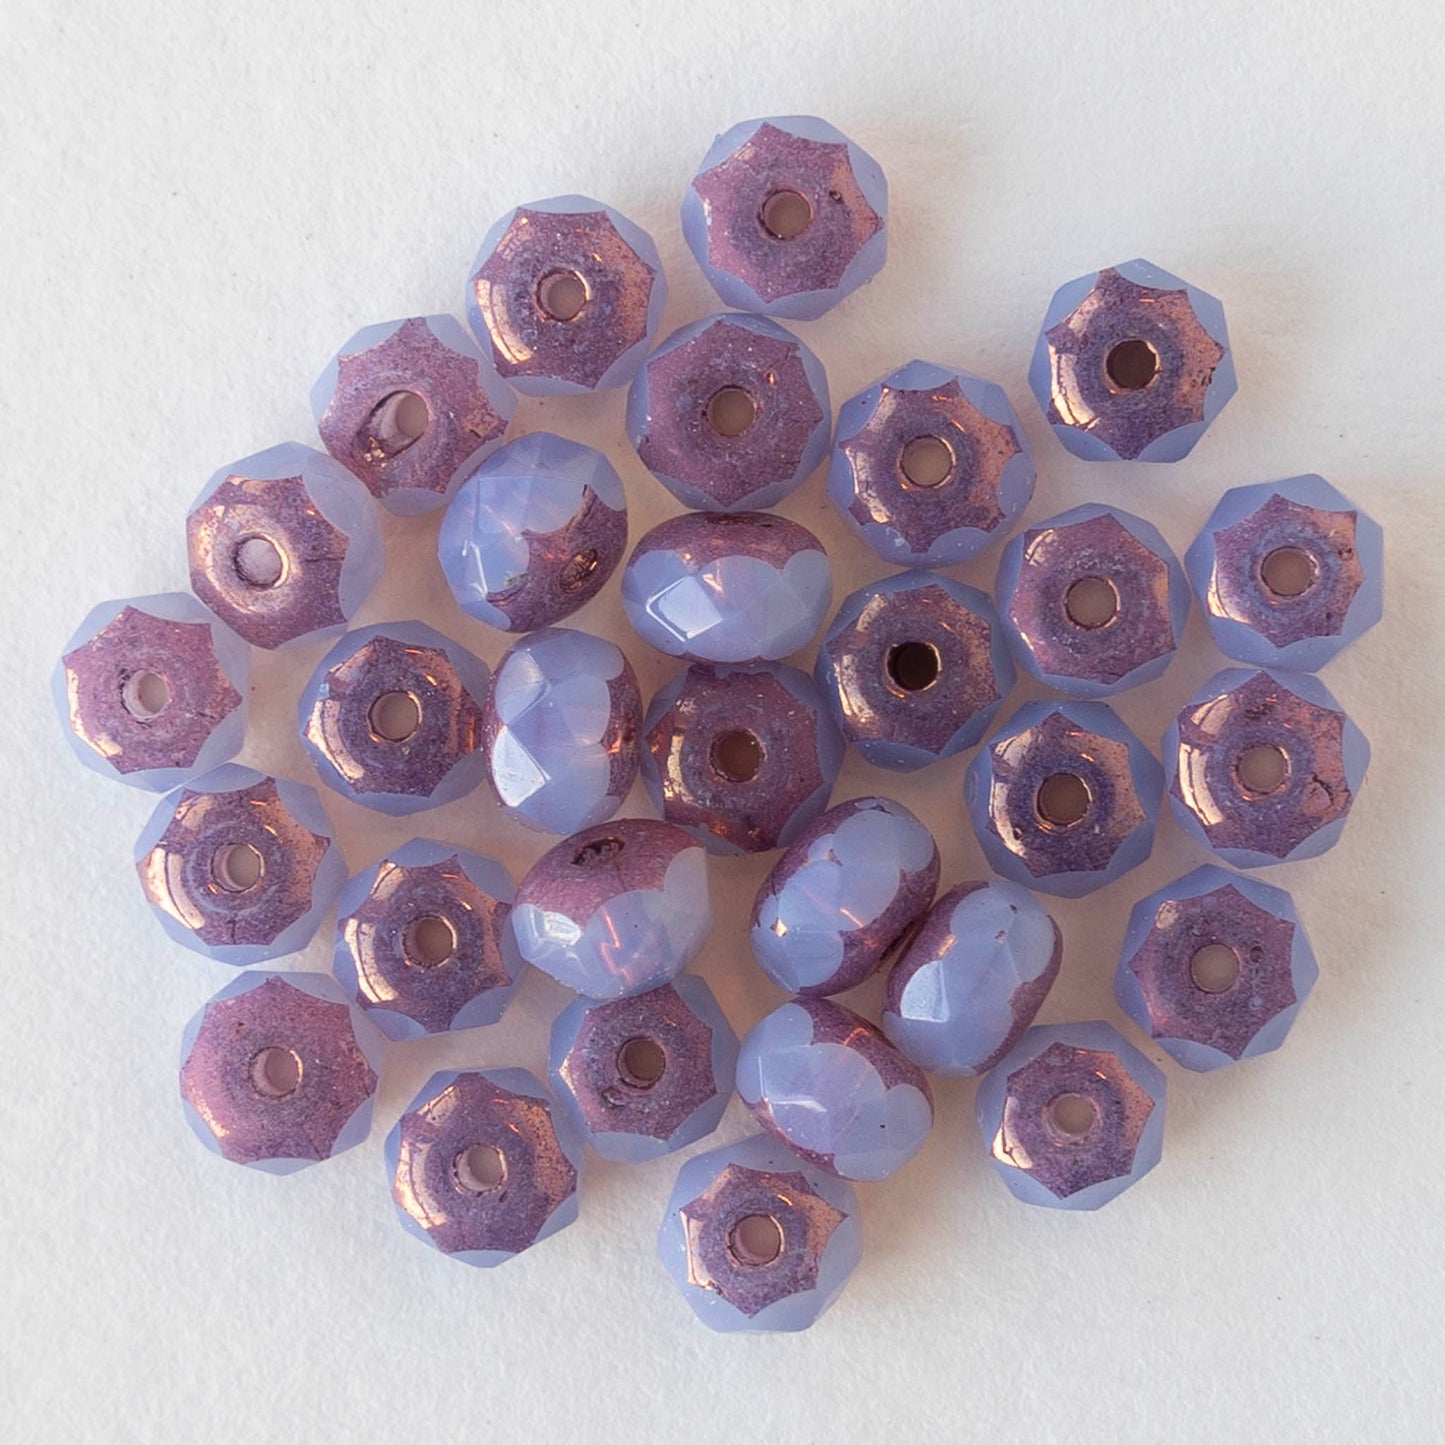 3x5mm Rondelles - Opaline Lavender Bronze - 30 Beads